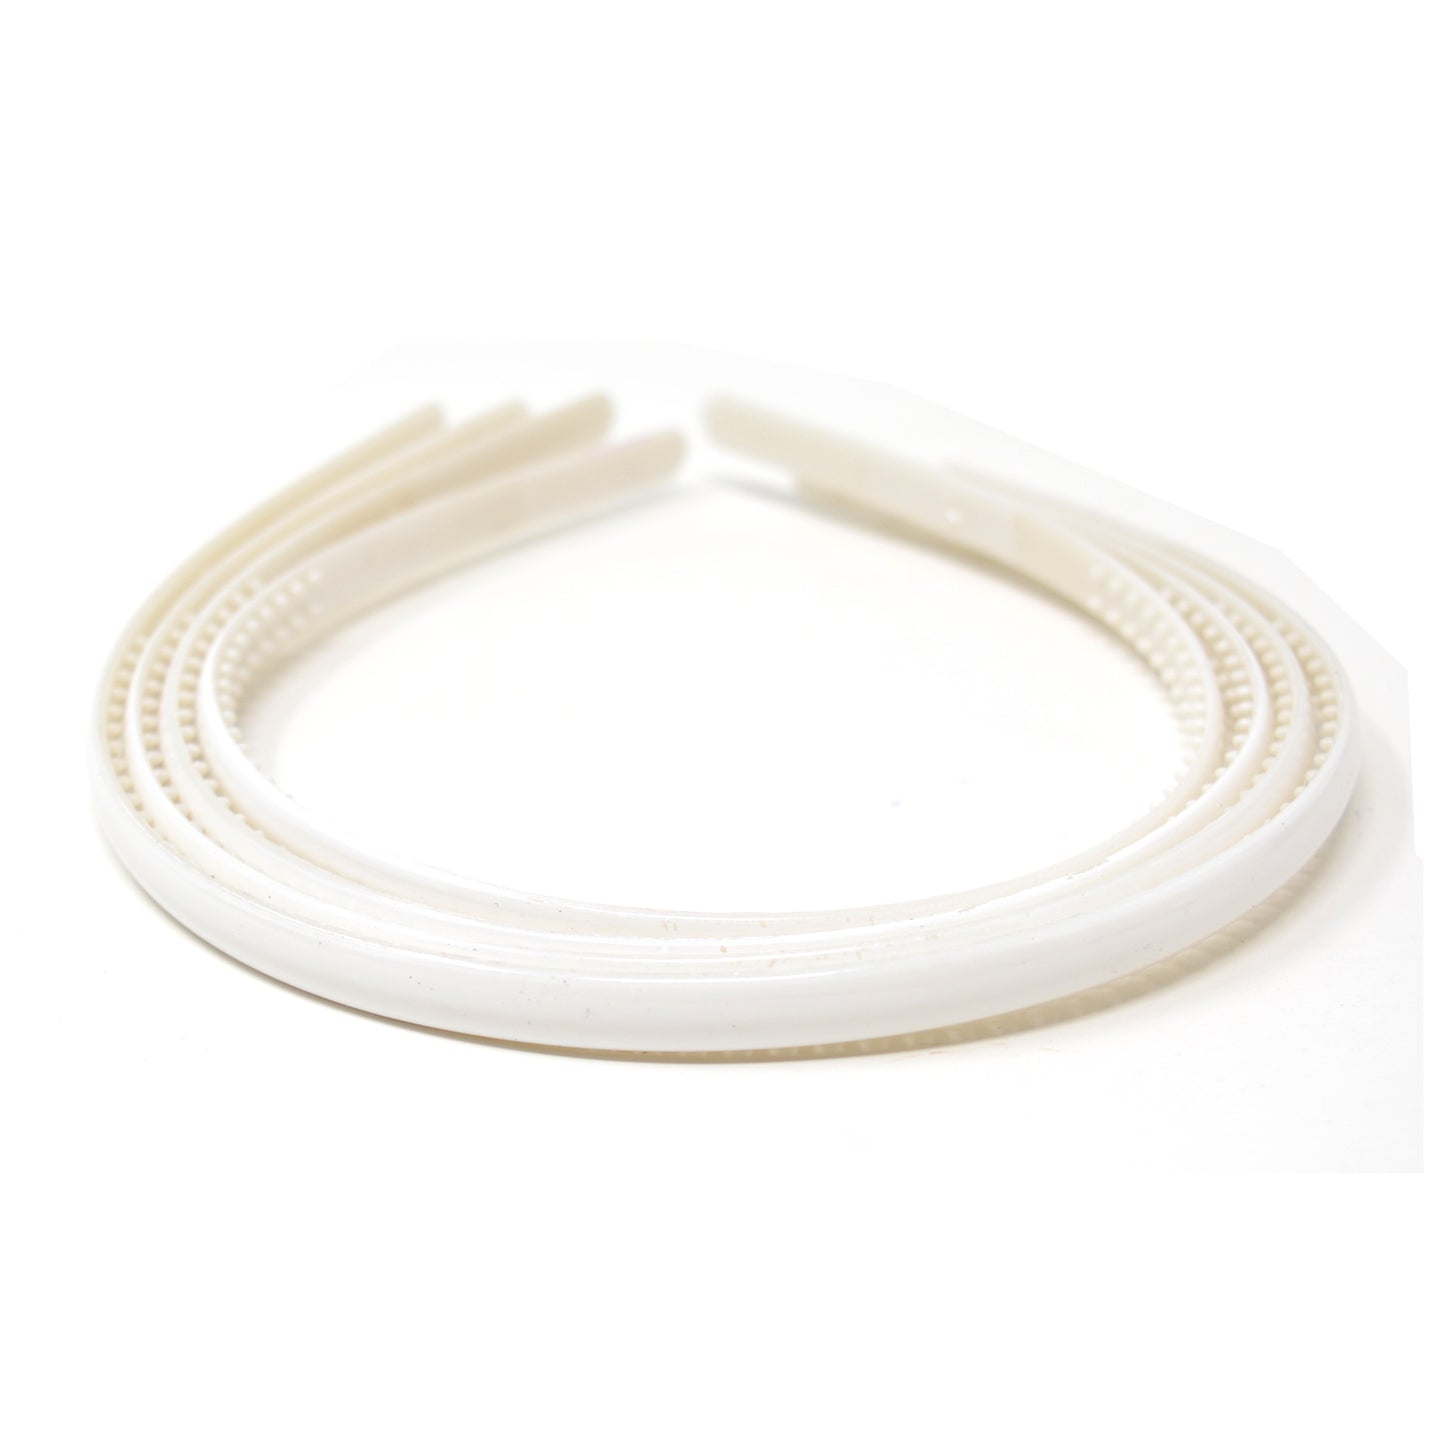 Set of Four White Sleek Plastic Hairbands for Girls and Women (005)